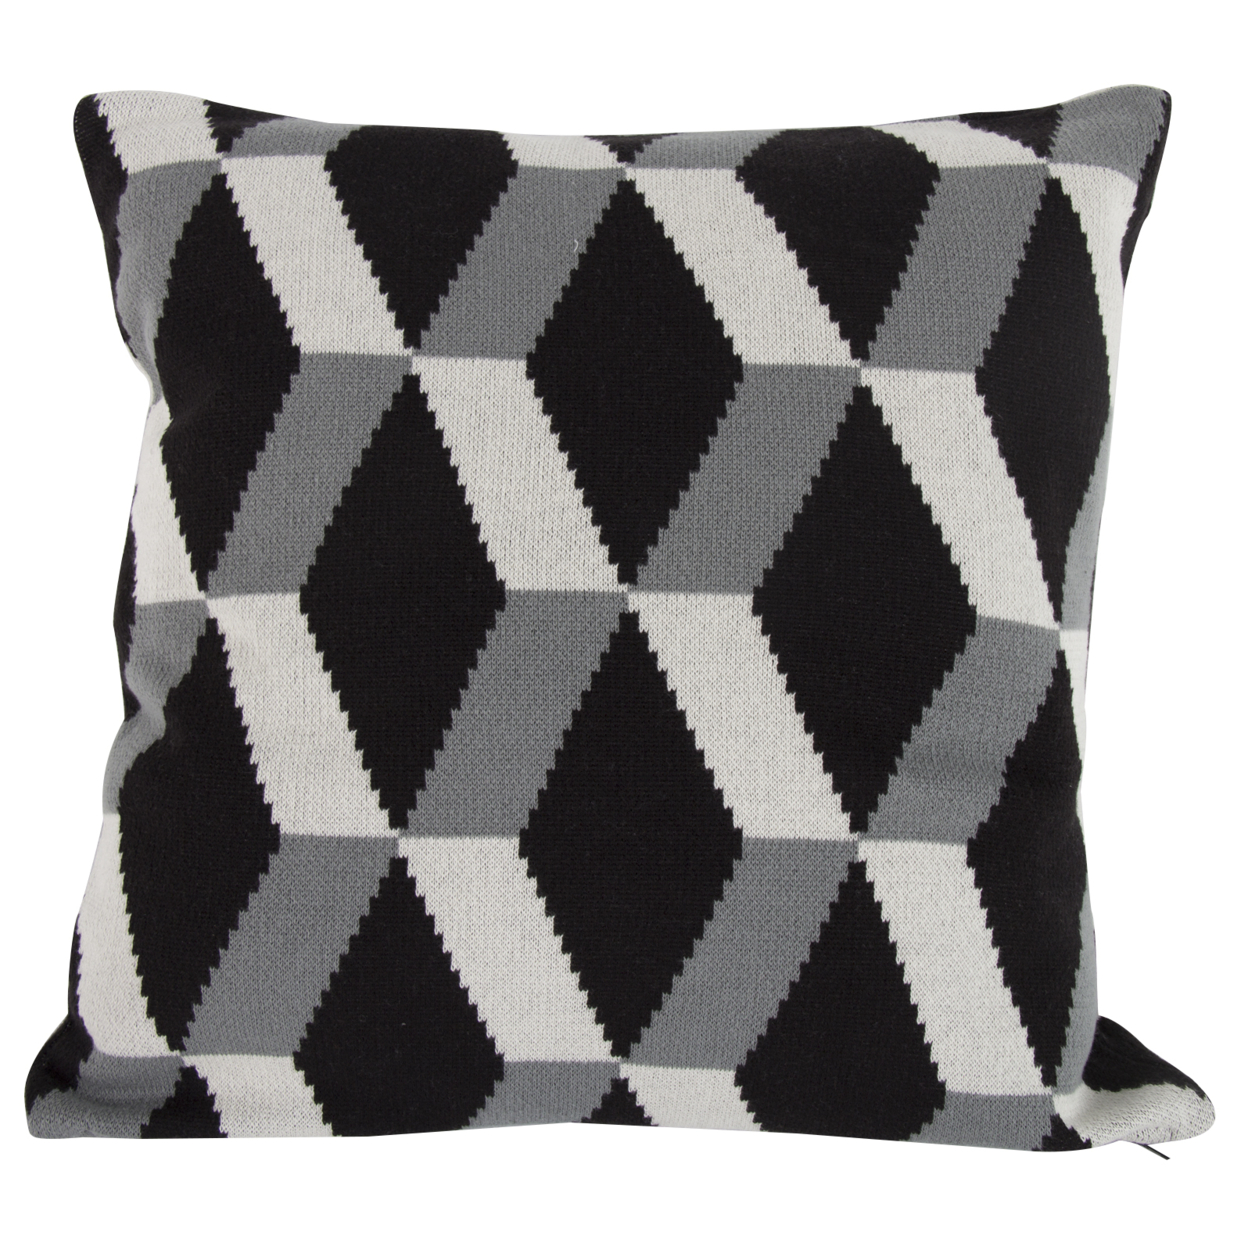 20 X 20 Inch Cashmere Pillow With Zig Zag Pattern, Set Of 2, Black And Gray- Saltoro Sherpi